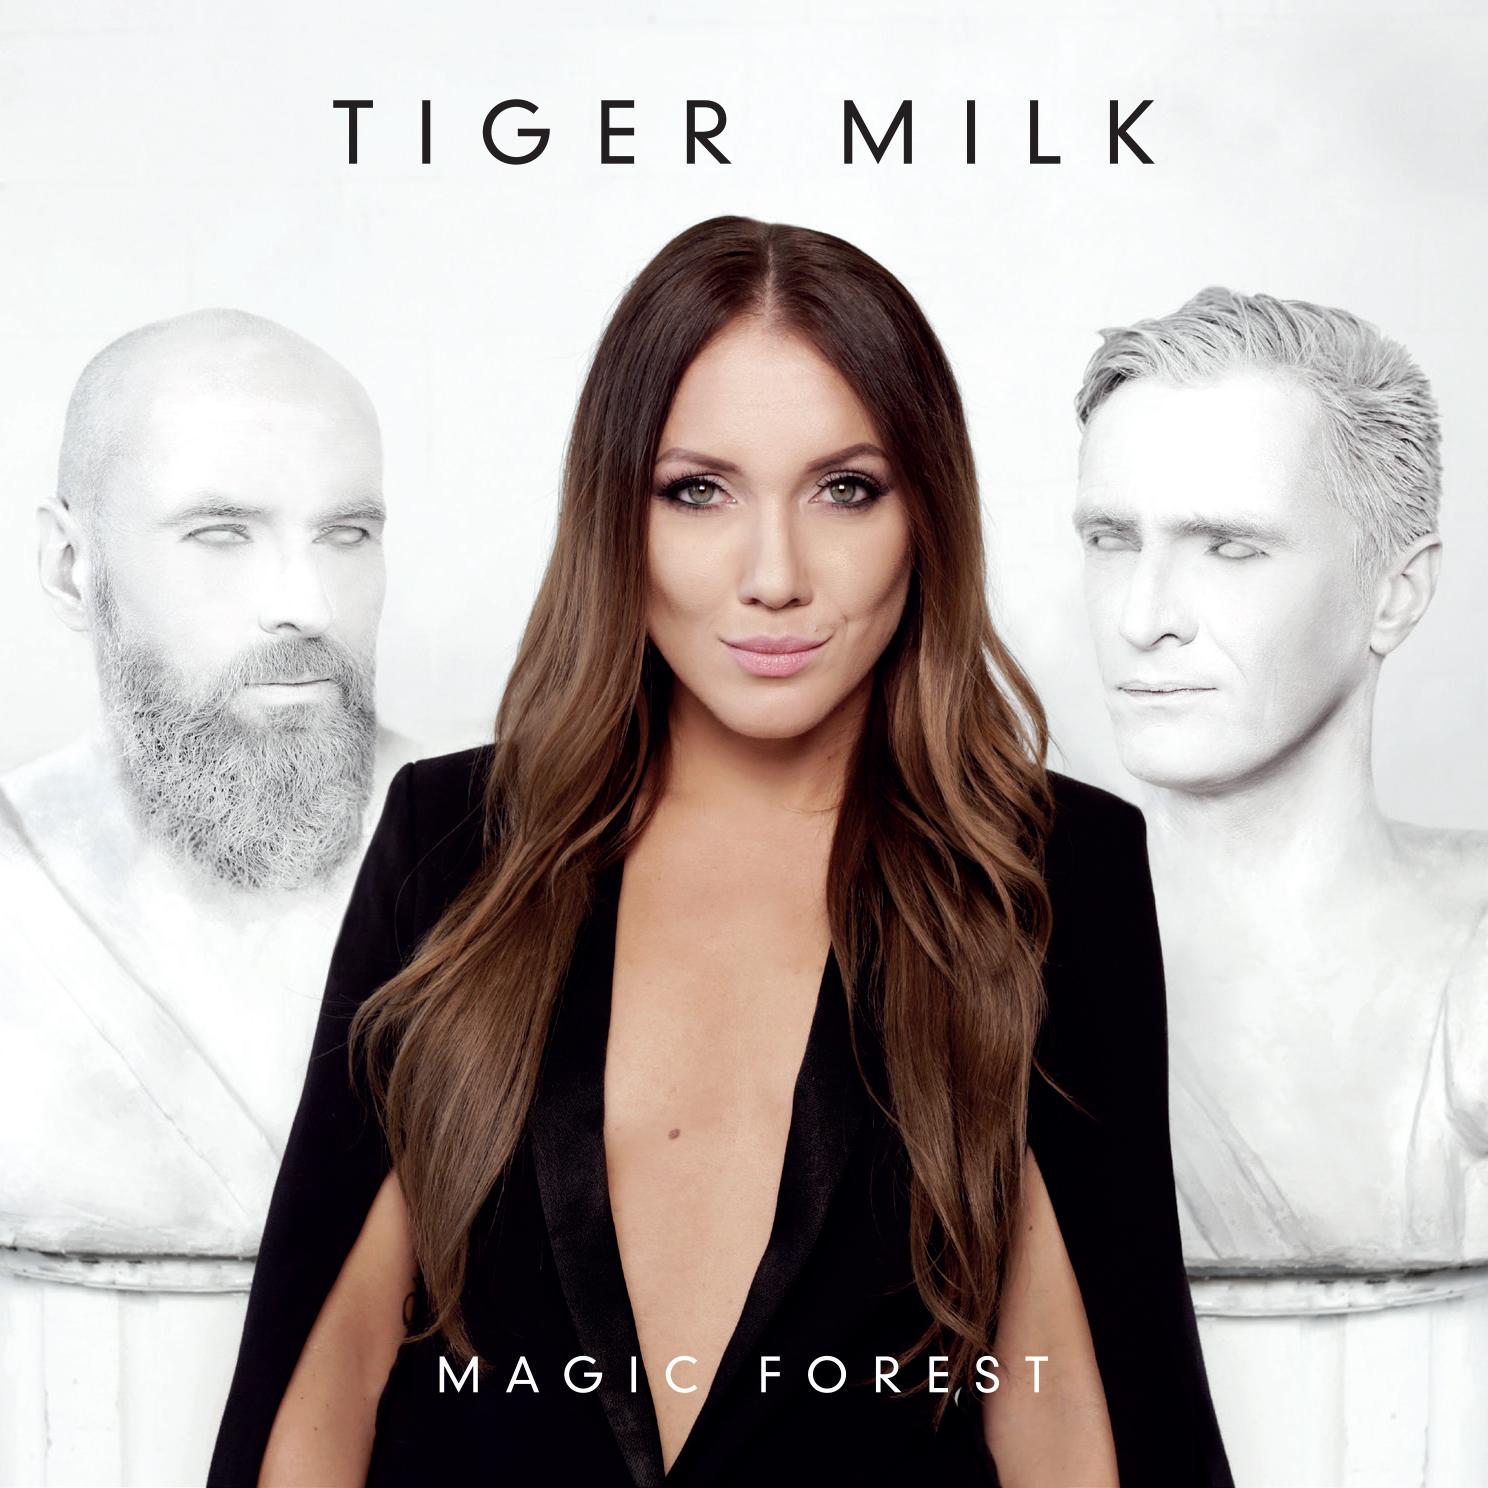 TIGER MILK - MAGIC FOREST LP